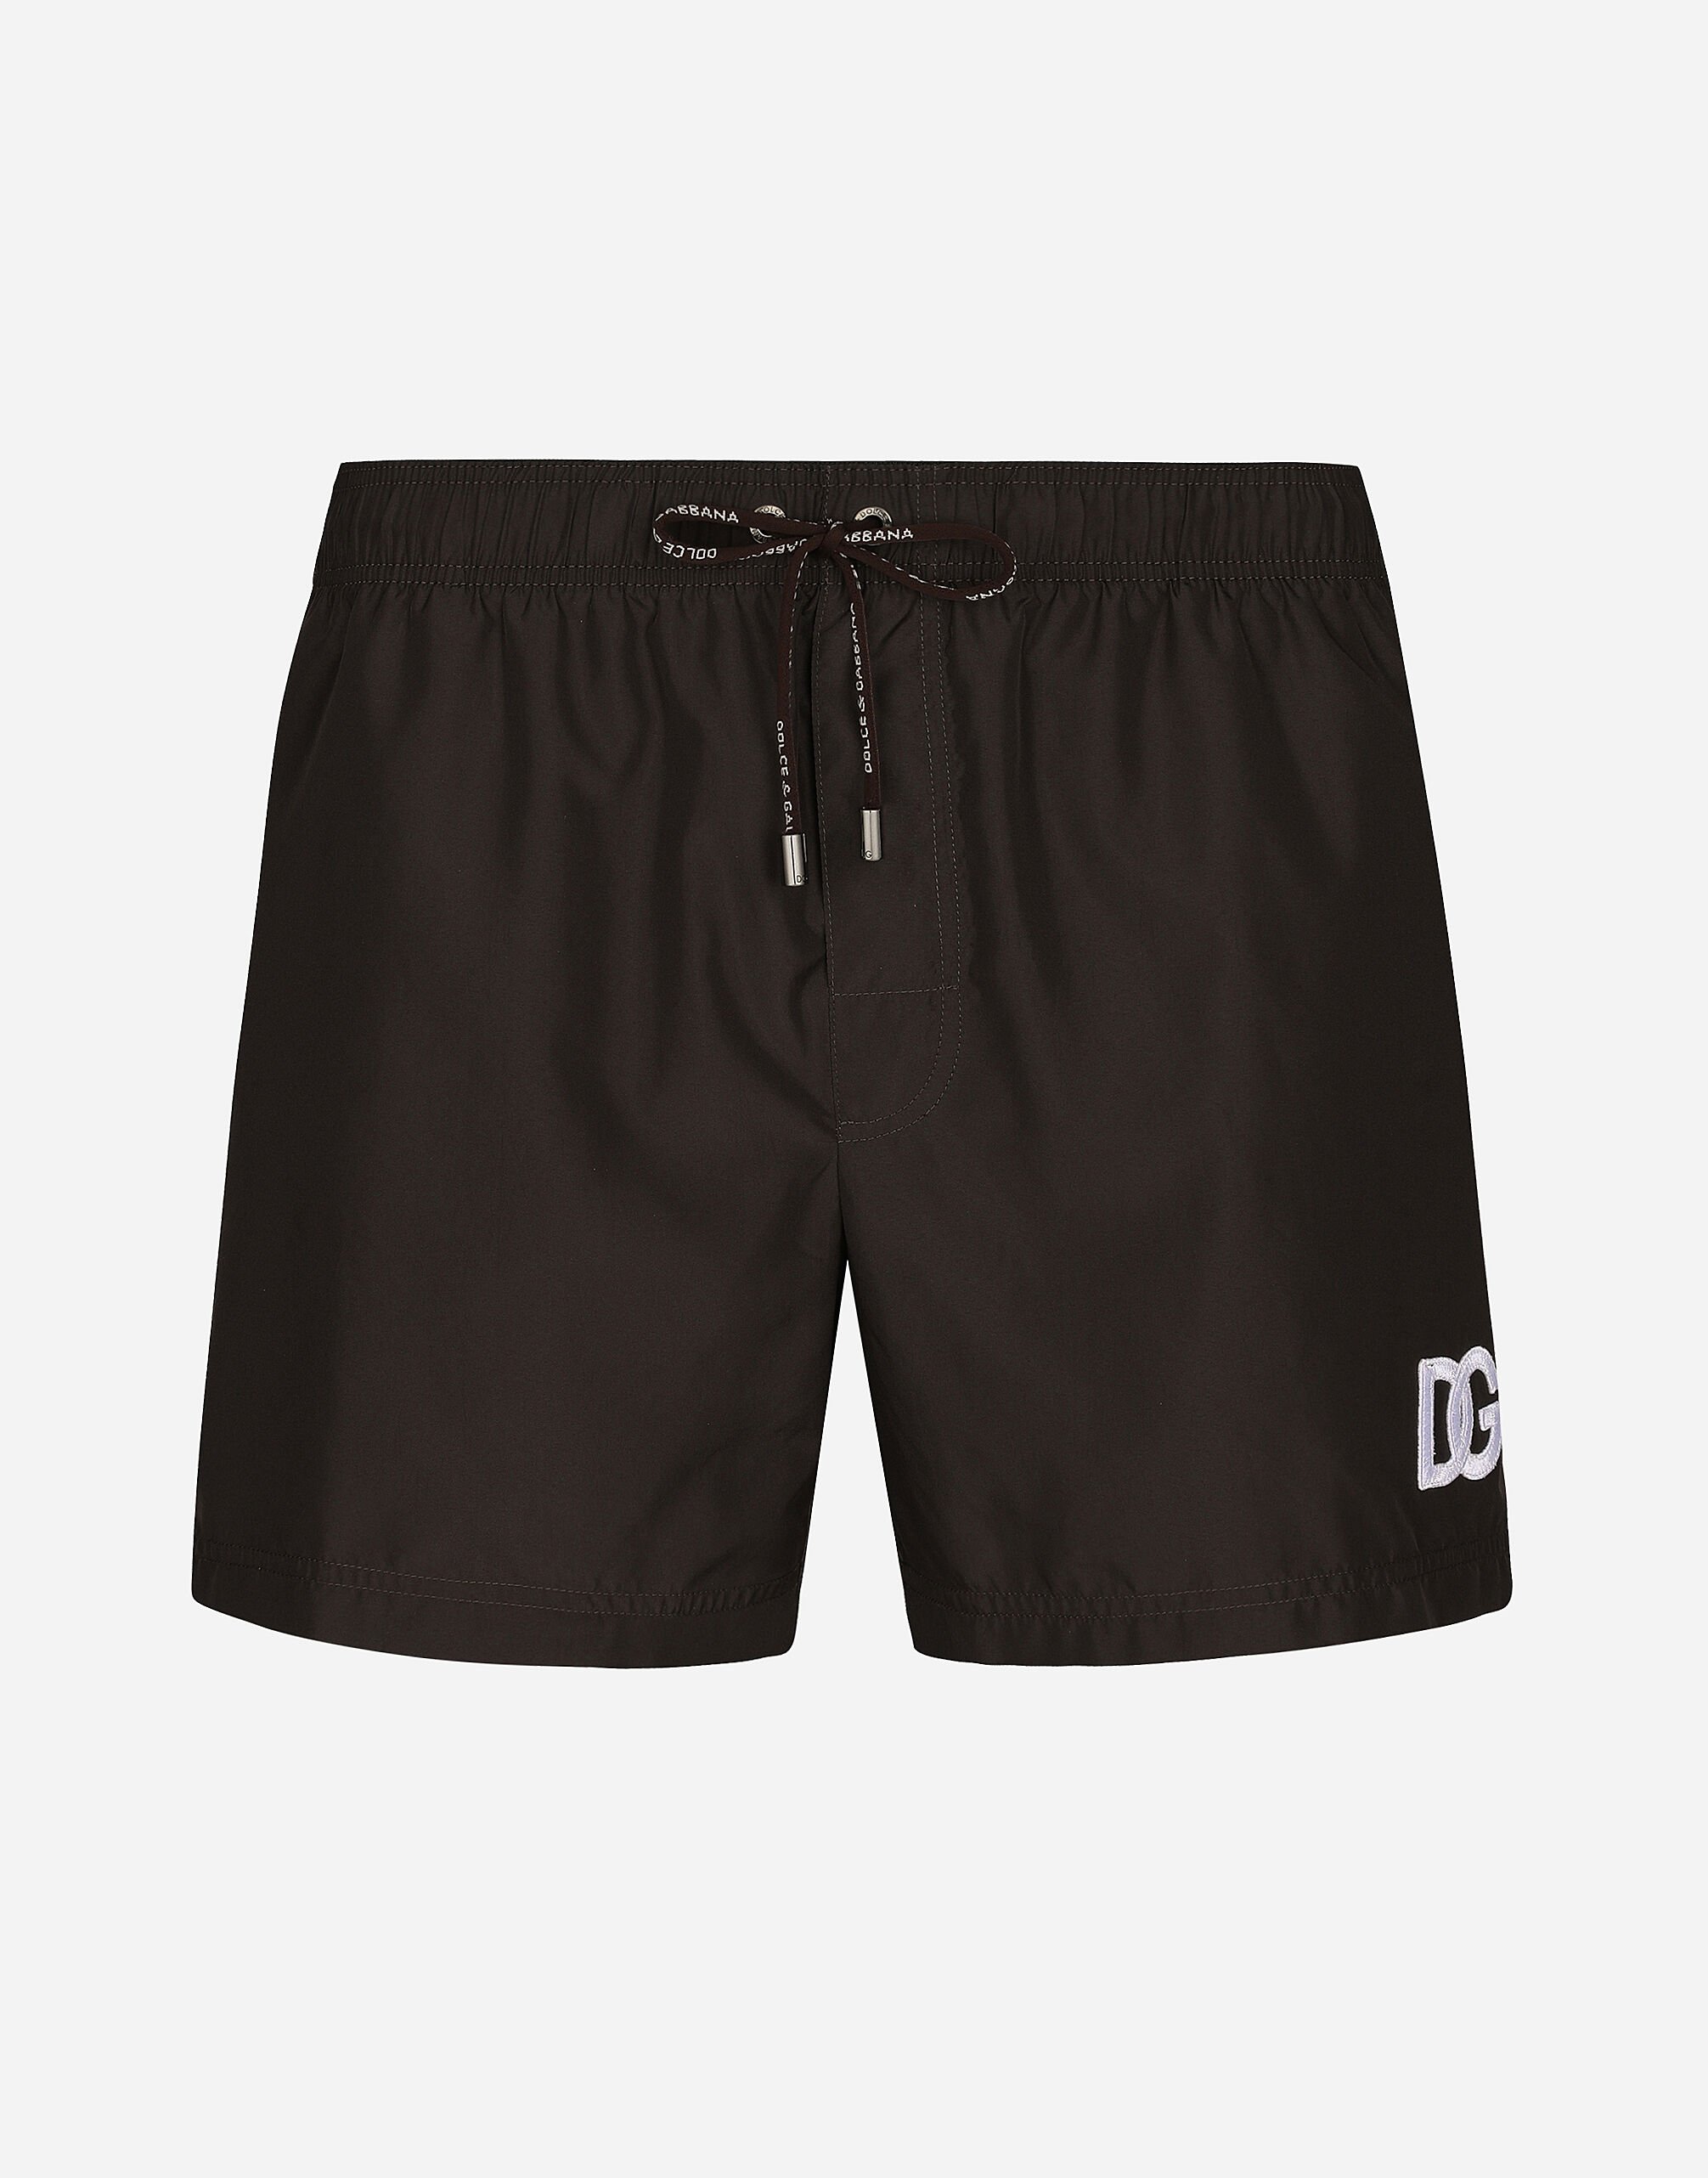 ${brand} Short swim trunks with DG logo patch ${colorDescription} ${masterID}